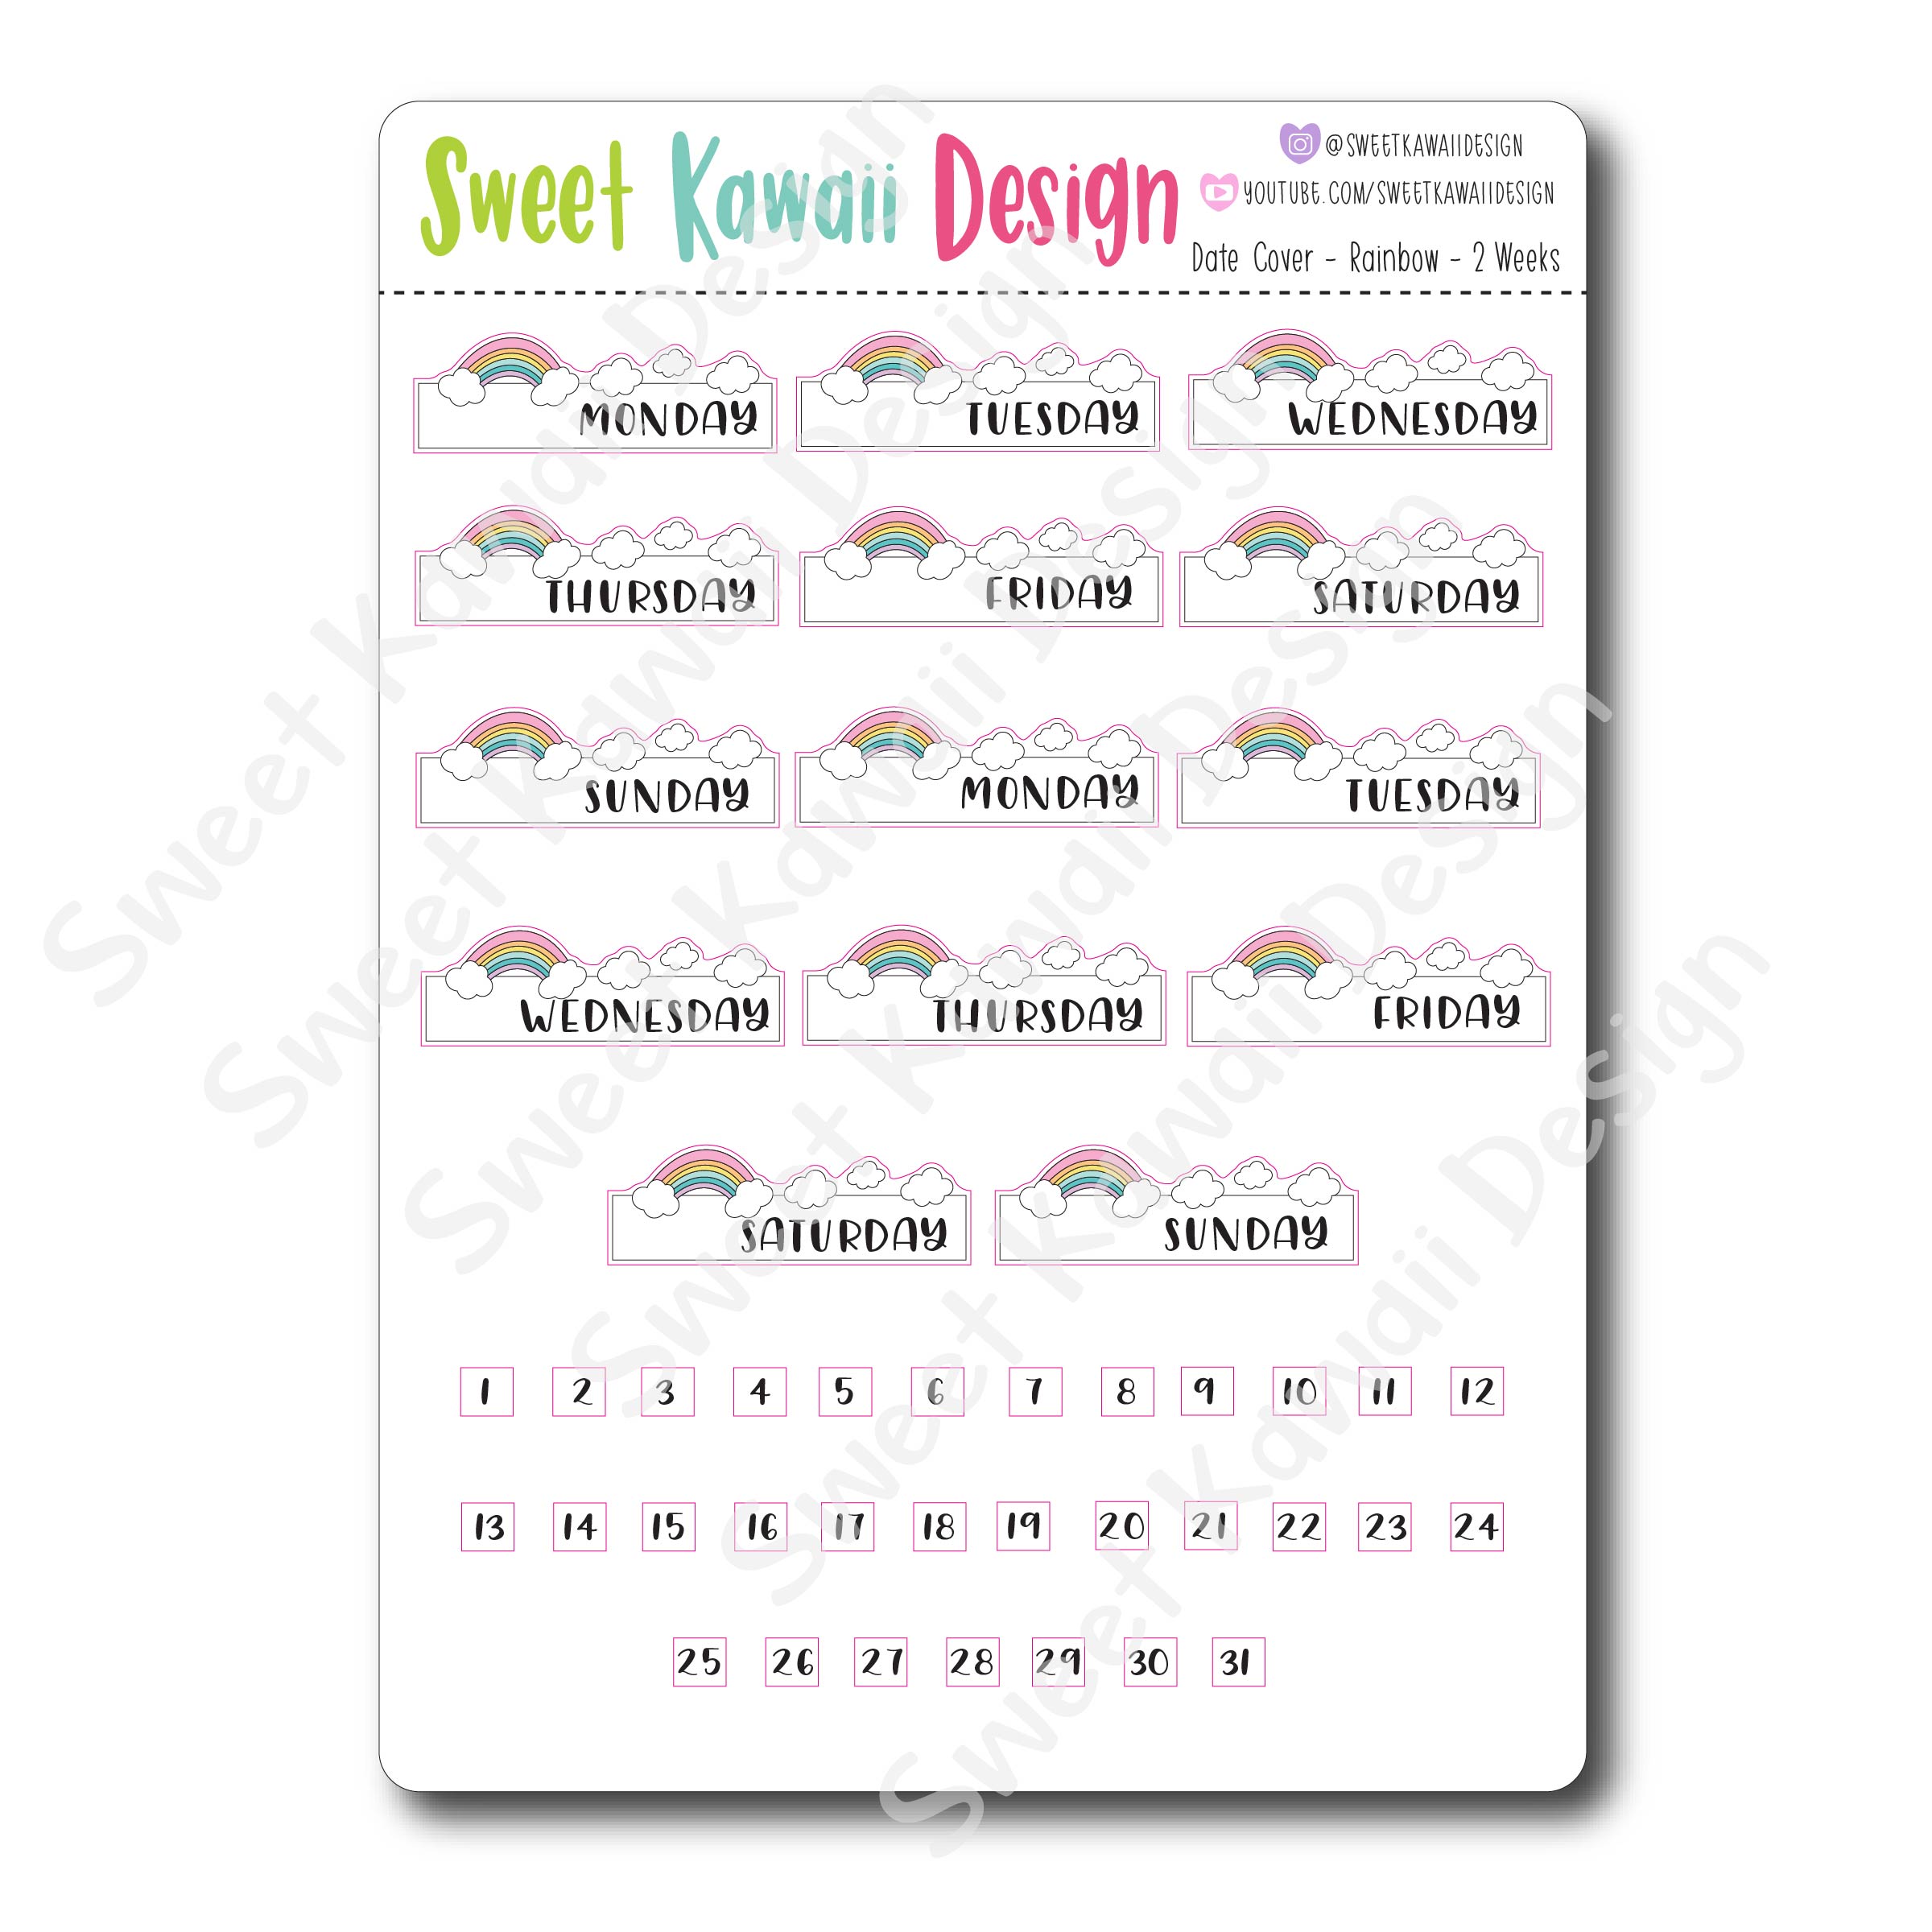 Kawaii Date Cover Stickers - Rainbow